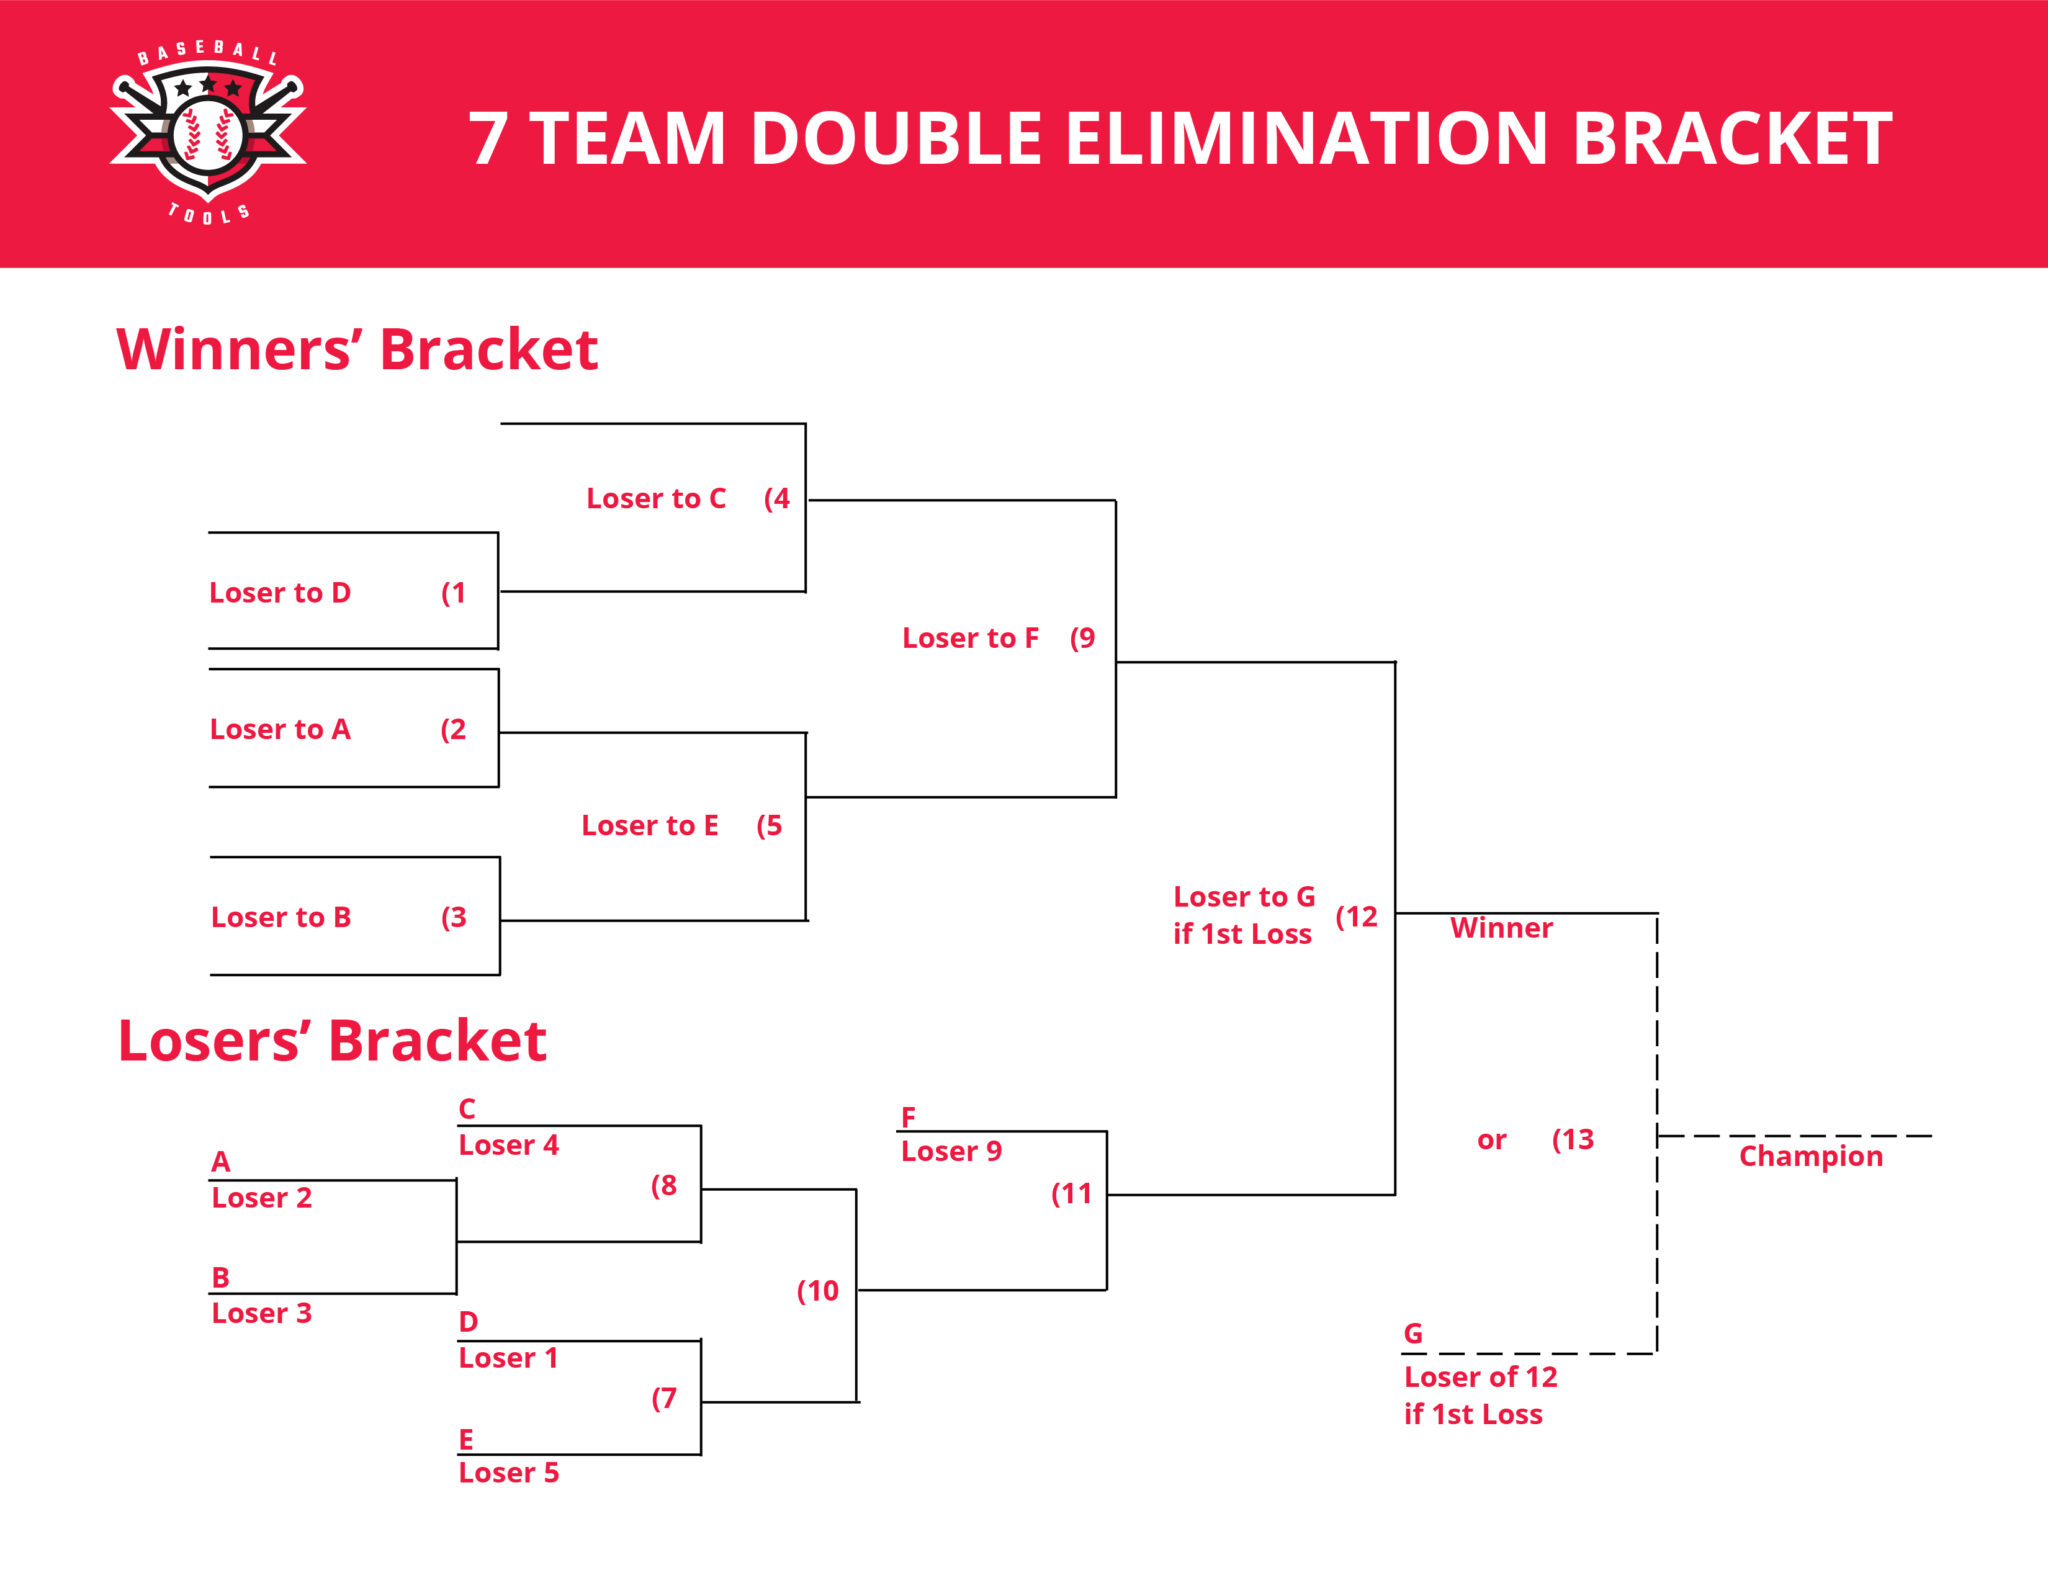 7 Team Double Elimination Bracket Baseball tools